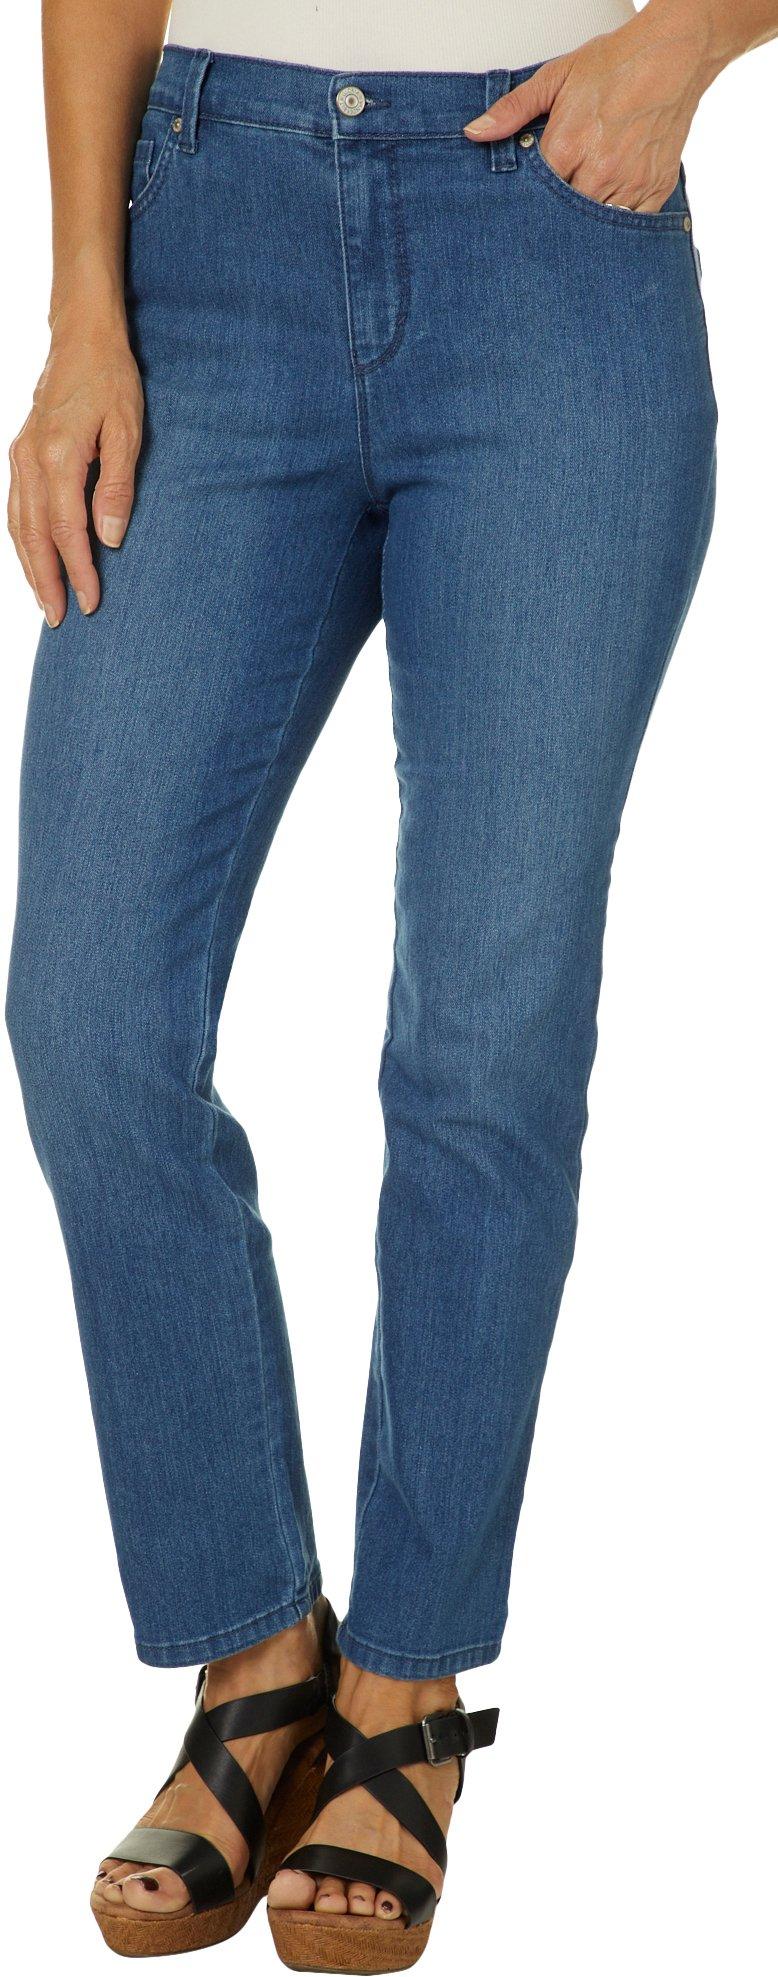 gloria vanderbilt amanda jeans 8 petite short